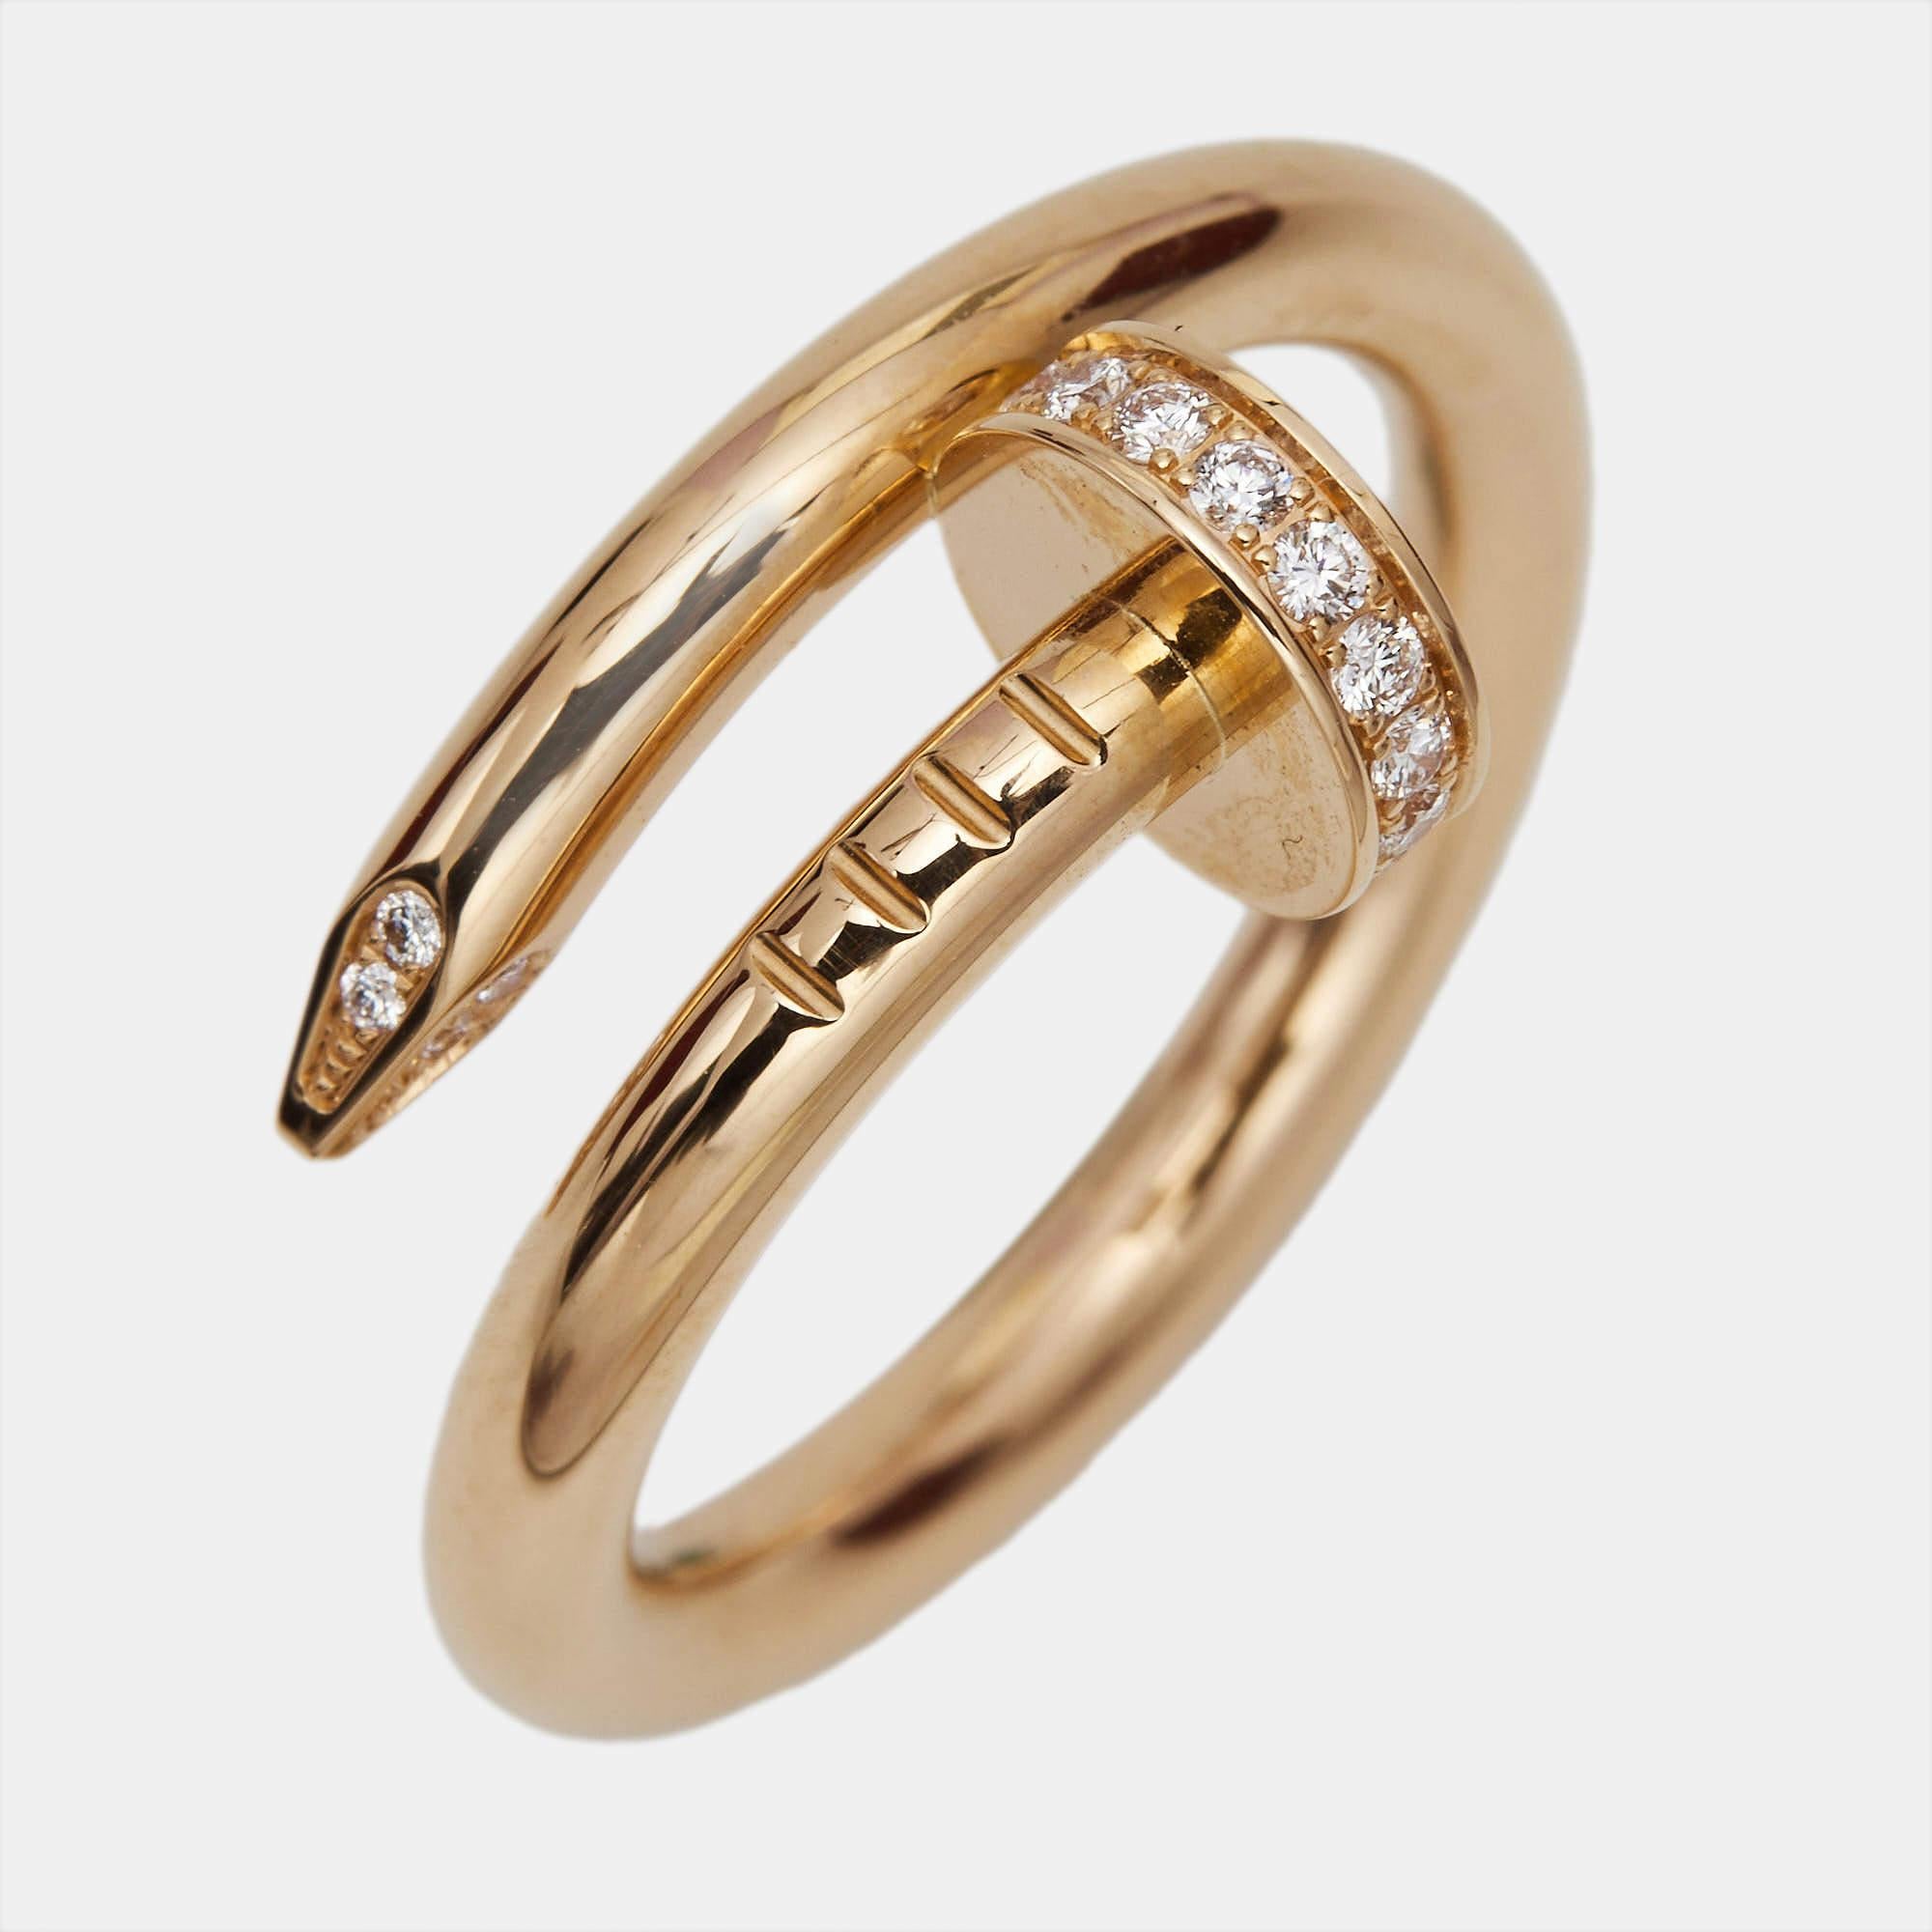 Cartier Juste Un Clou Diamonds 18k Yellow Gold Ring Size 52 In Excellent Condition For Sale In Dubai, Al Qouz 2